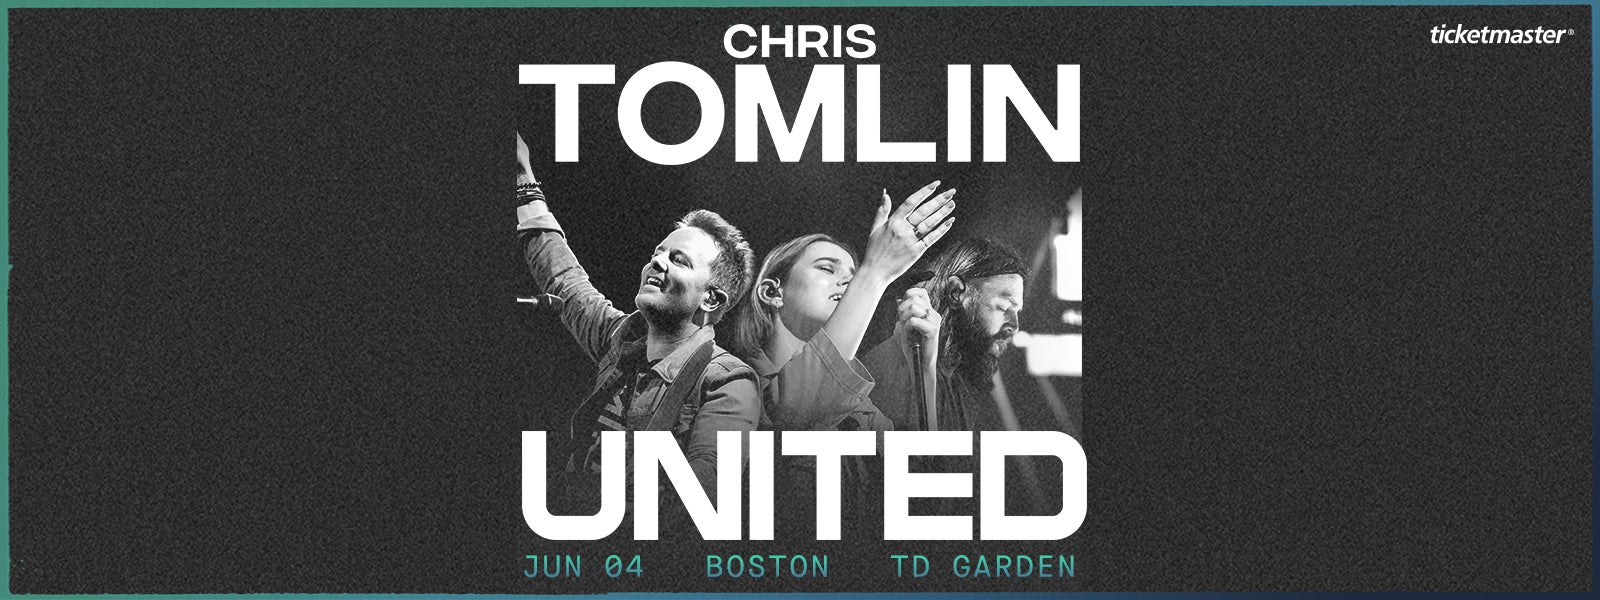 Chris Tomlin & United